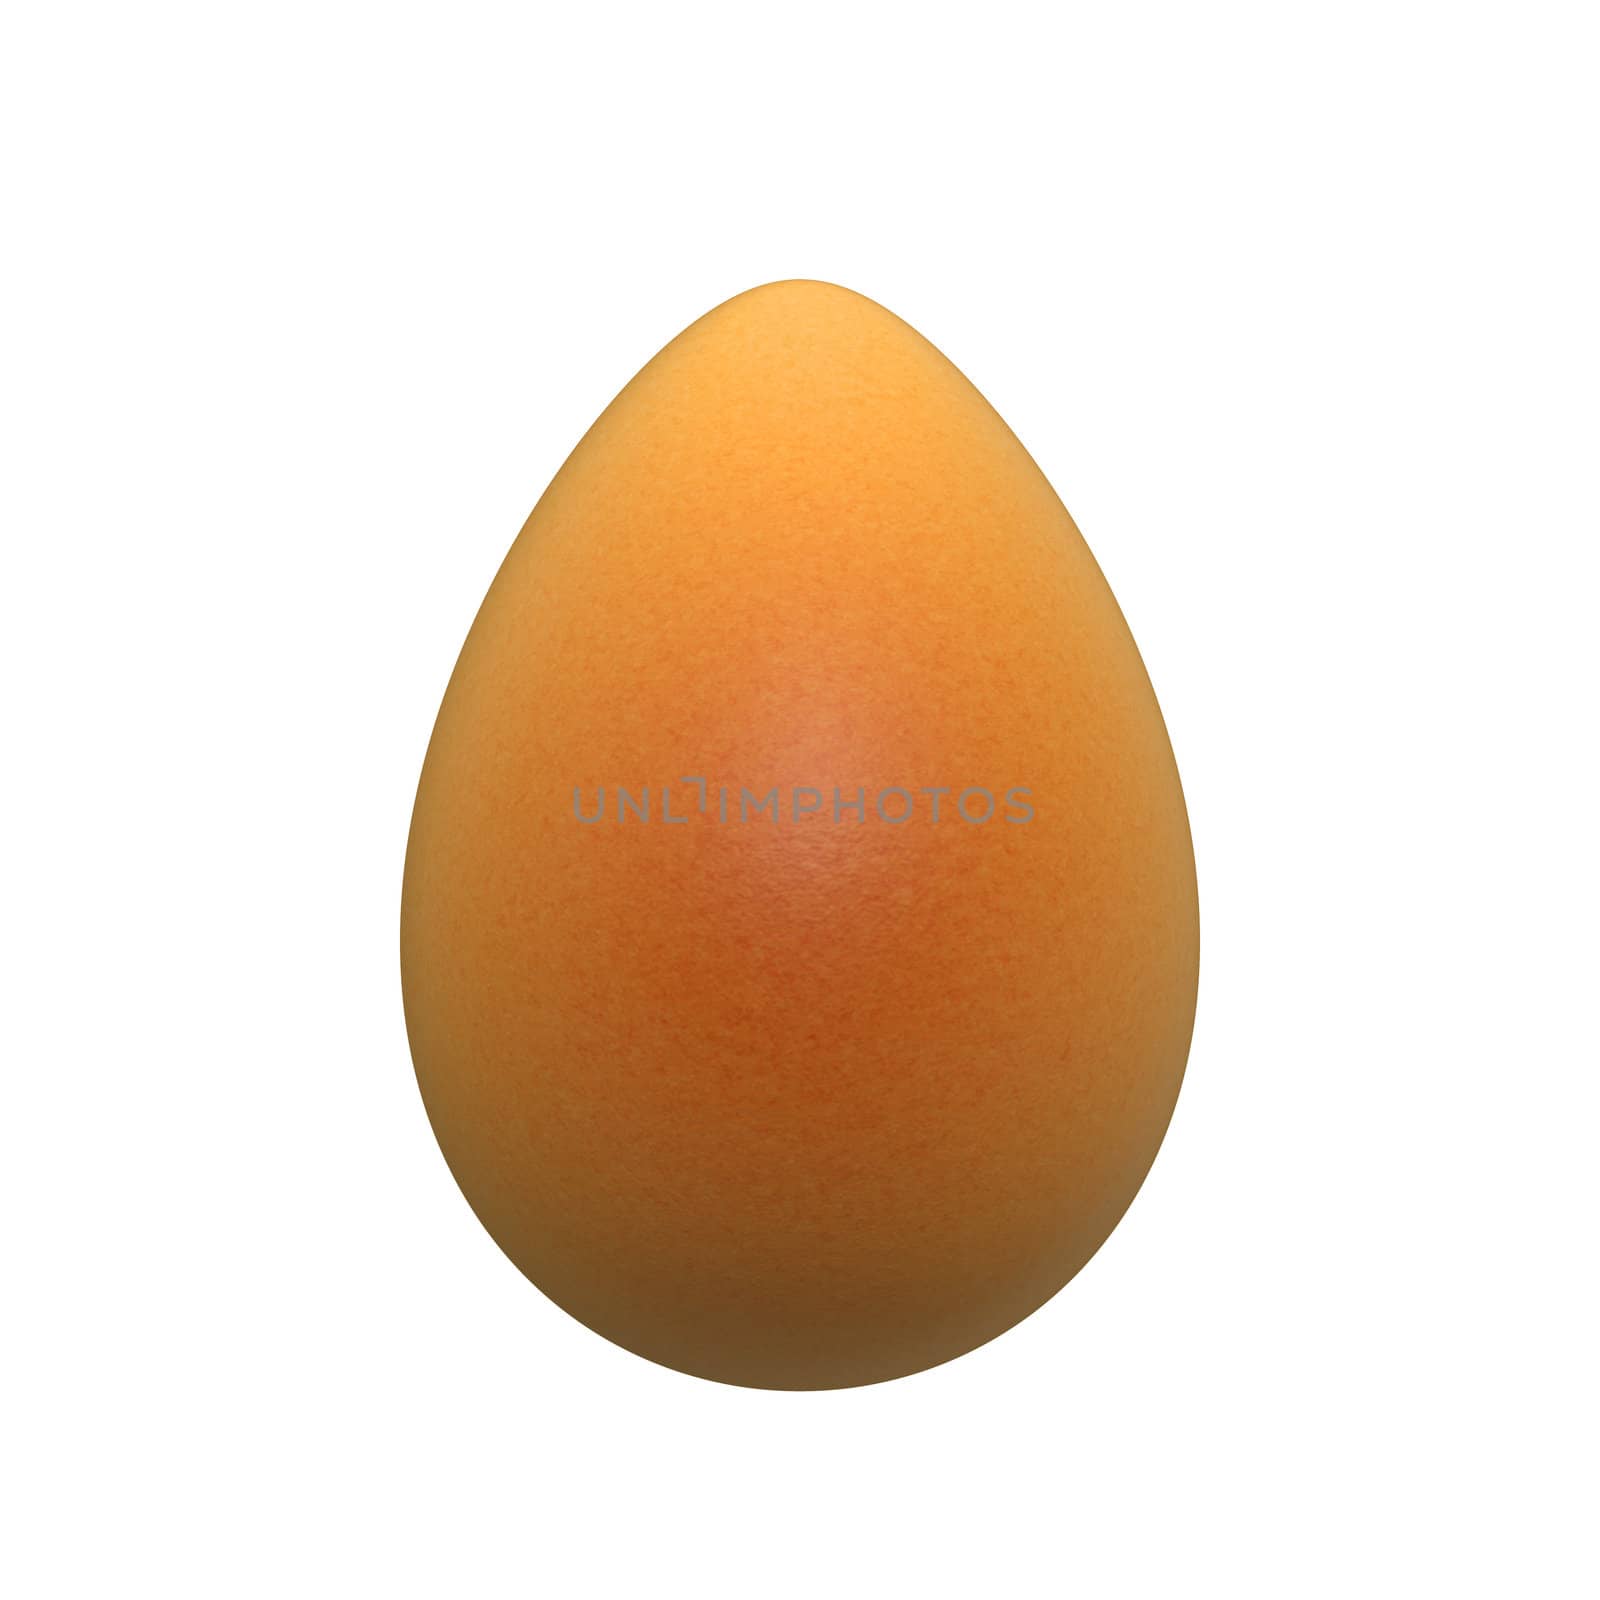 egg on white by magann